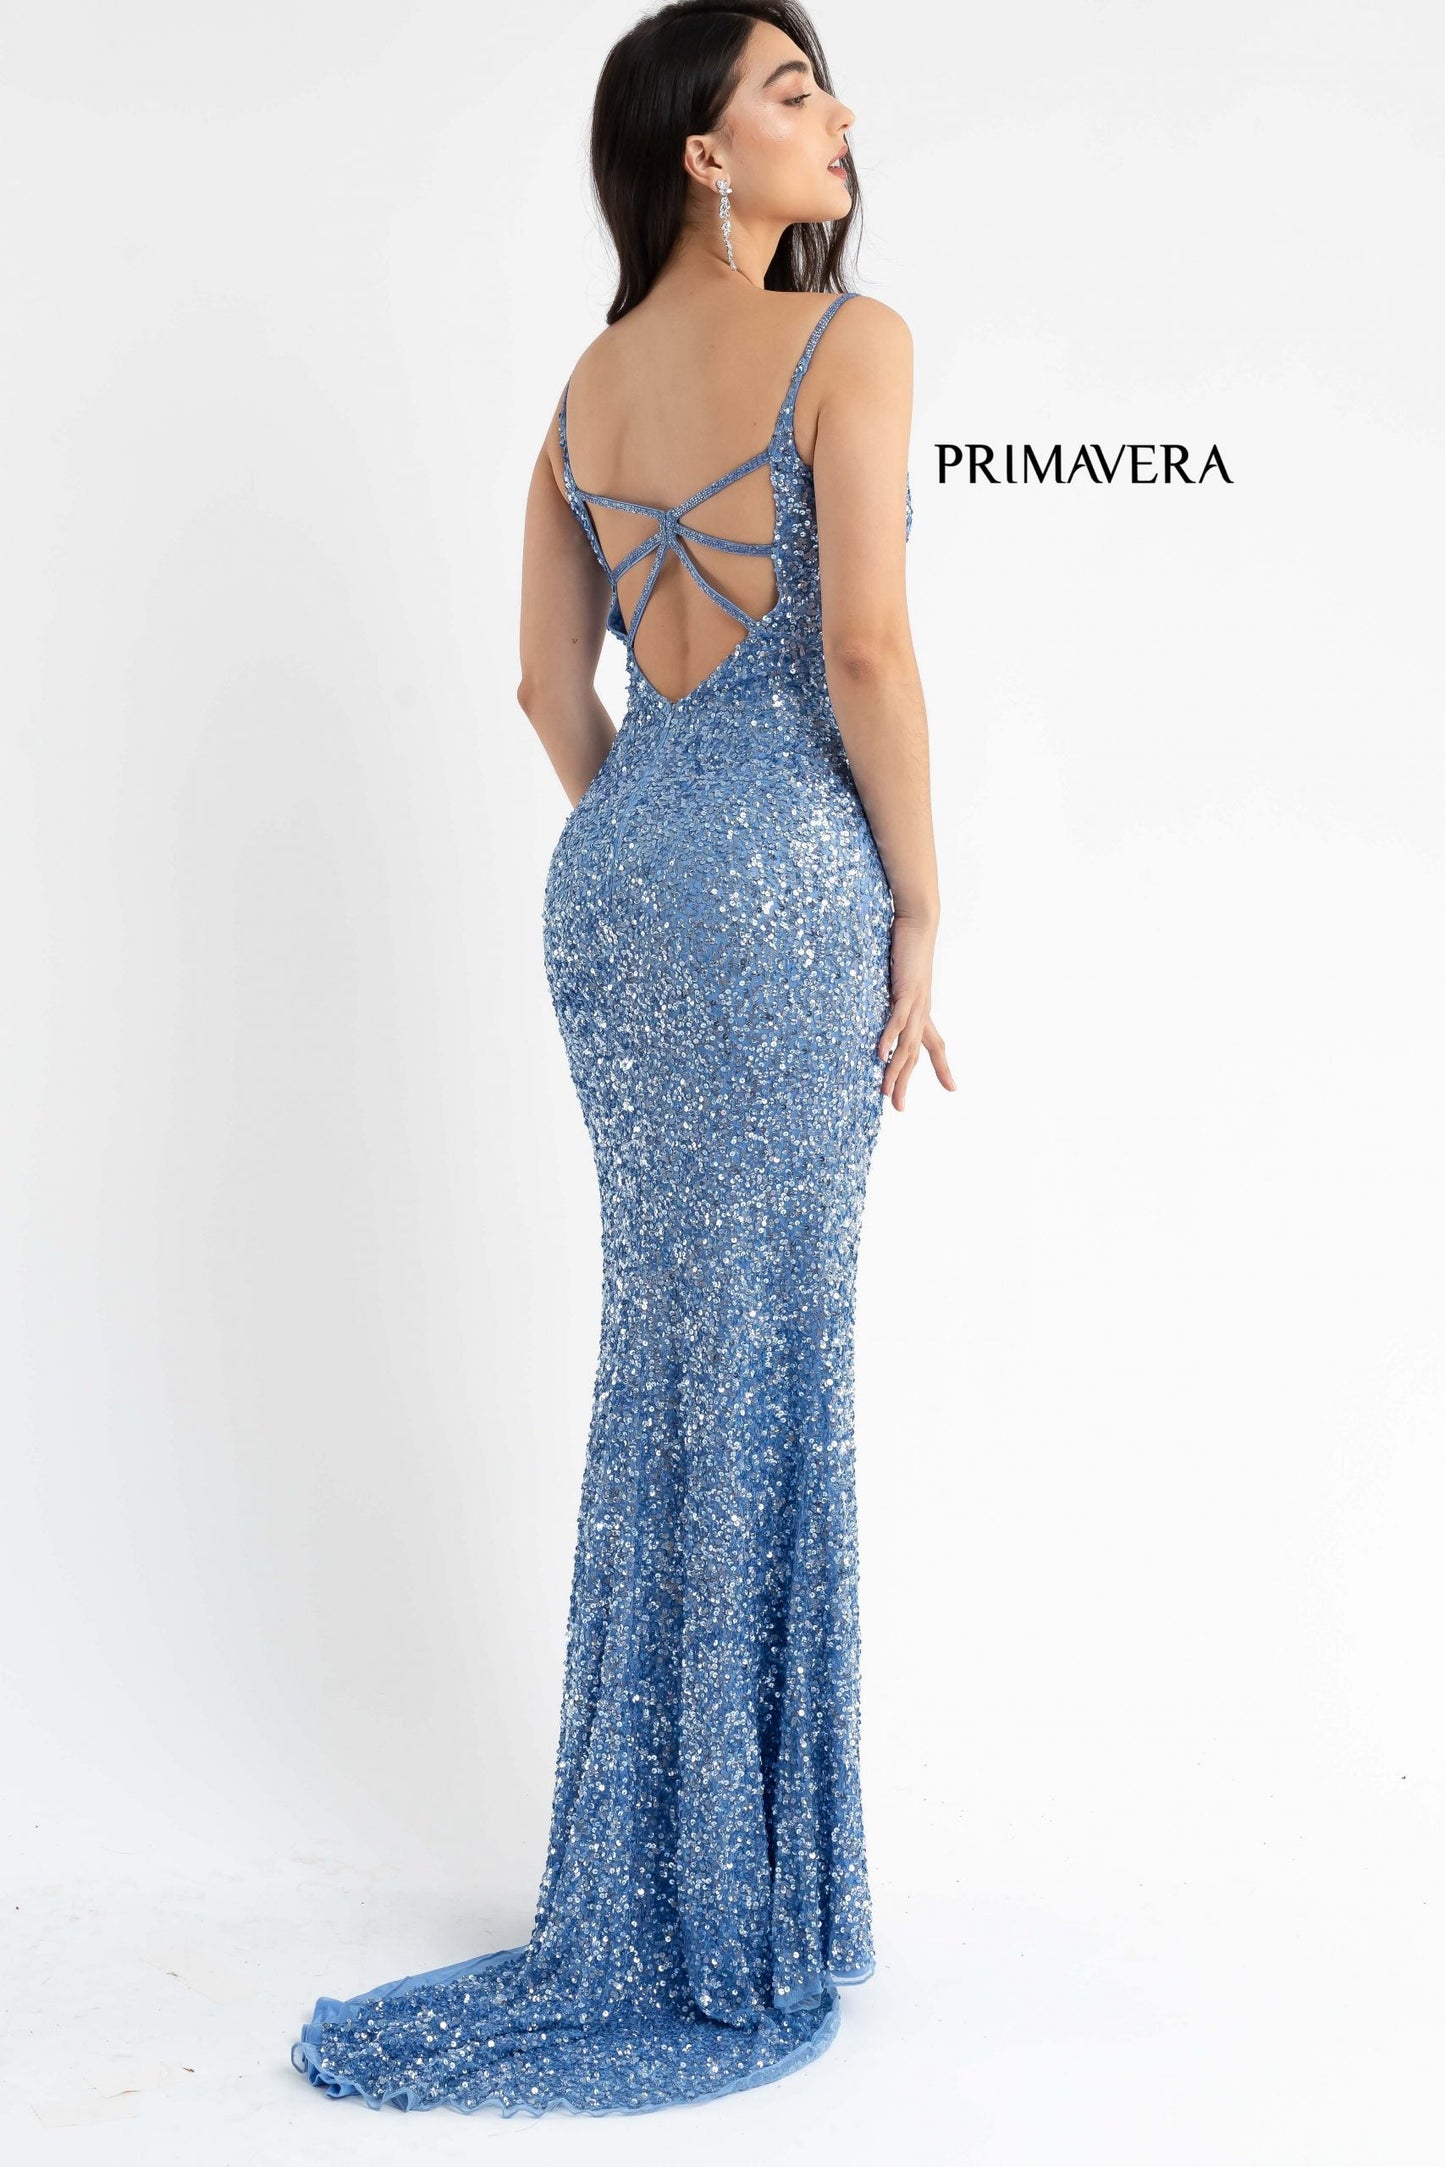 Primavera Couture 3792 Size 0, 12 Turquoise Sequin Prom Dress V Neckline Strappy Open Back Side Slit Train